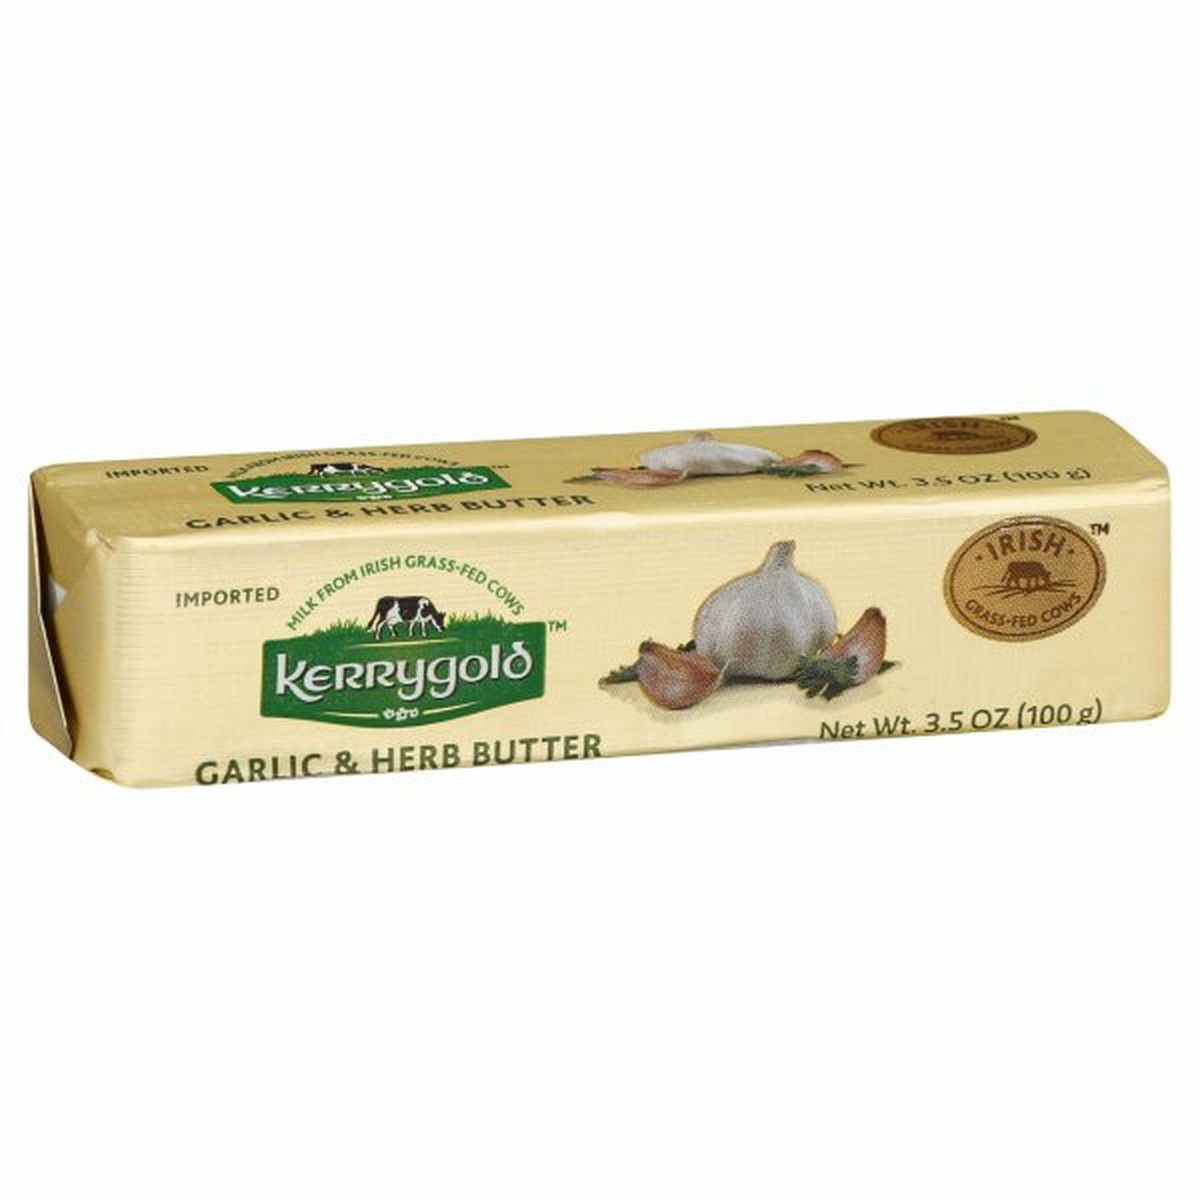 Calories in Kerrygold Butter, Garlic & Herb